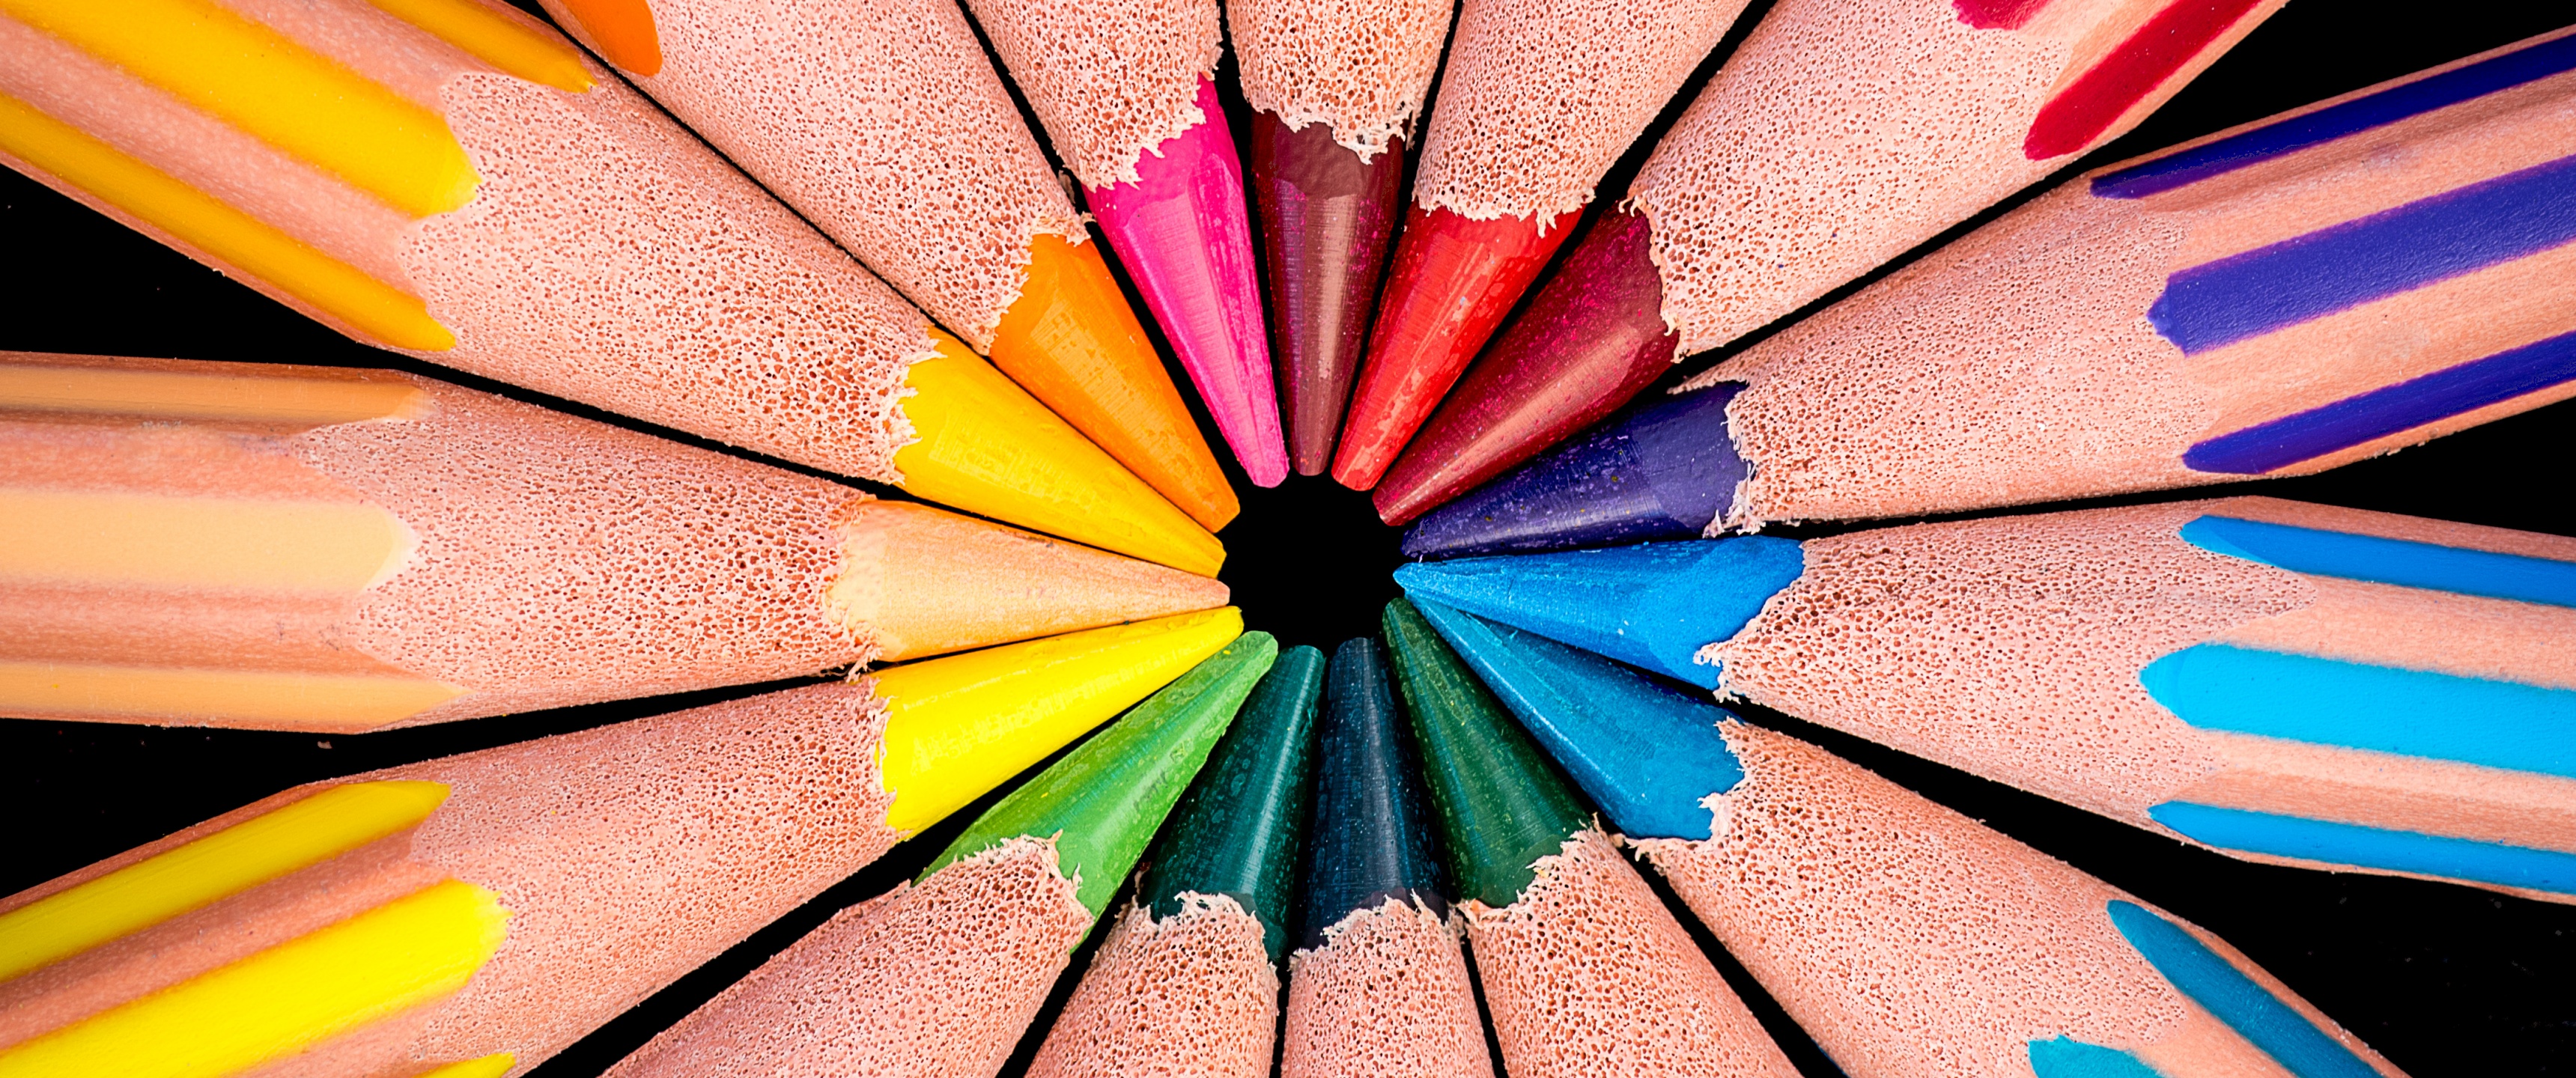 Color pencils Wallpaper 4K, Multicolor, AMOLED, Photography, #5490